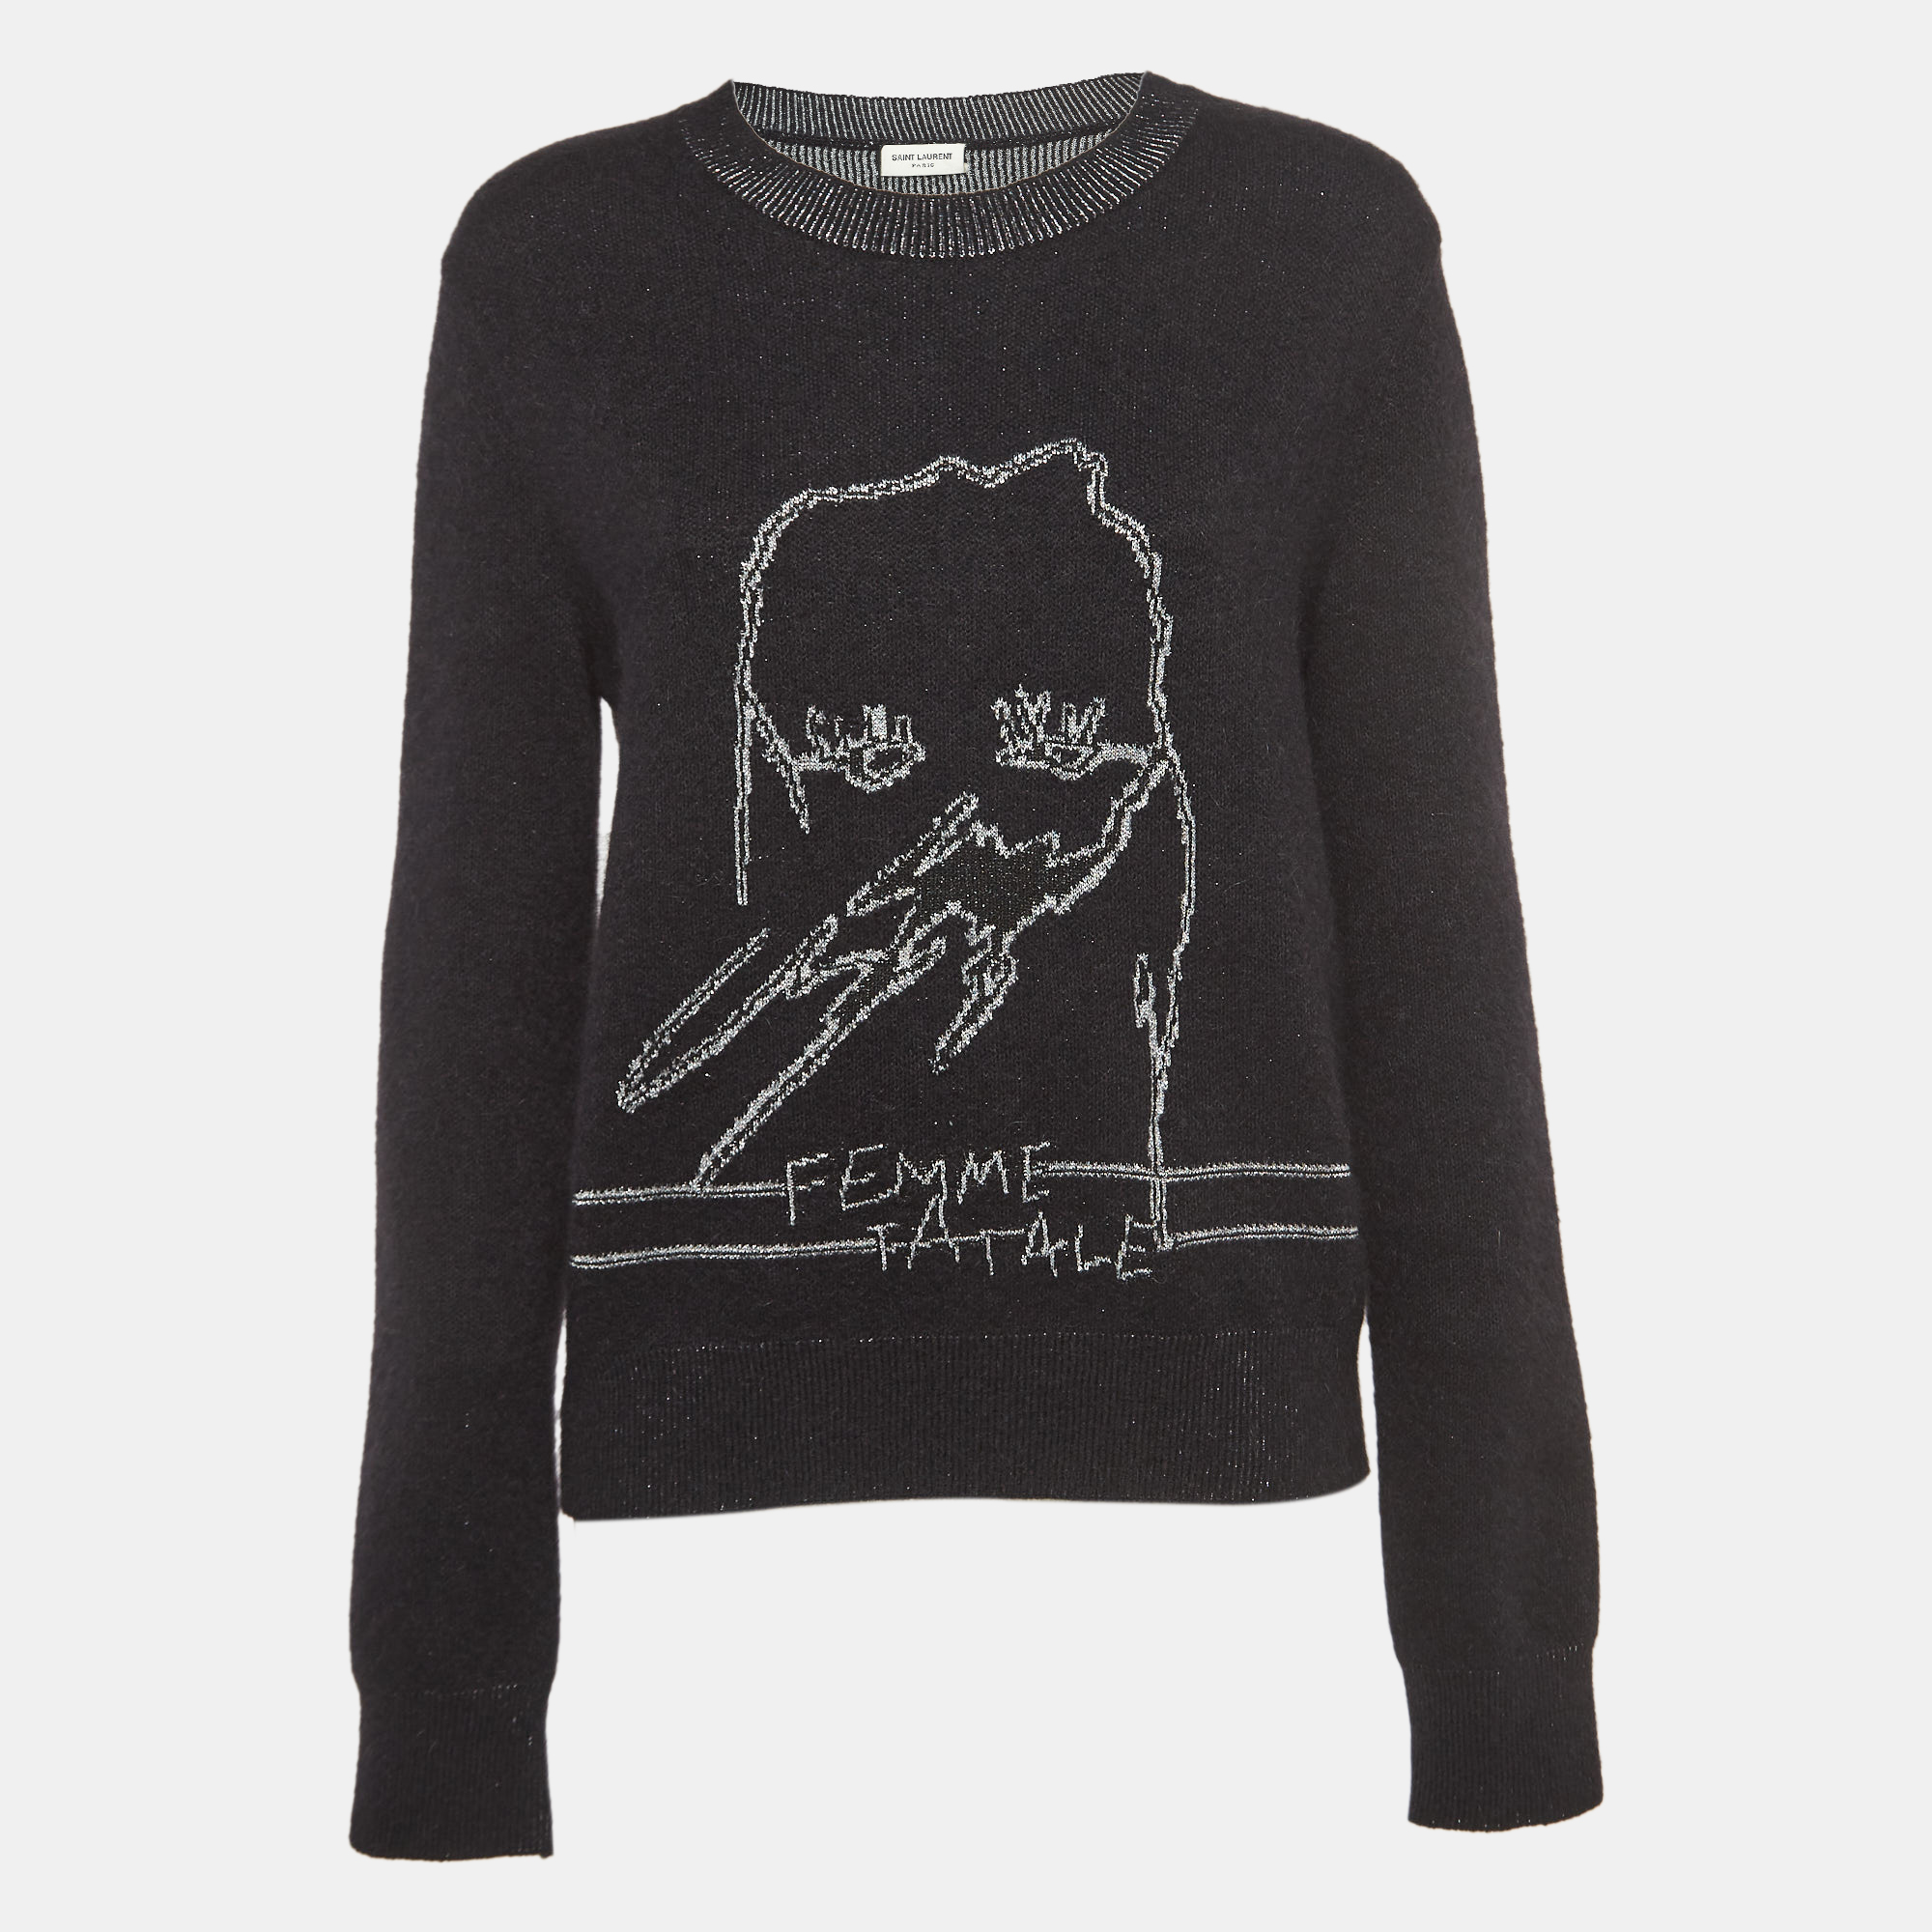 Saint Laurent Black/Metallic Femme Fatale Wool Blend Sweater L